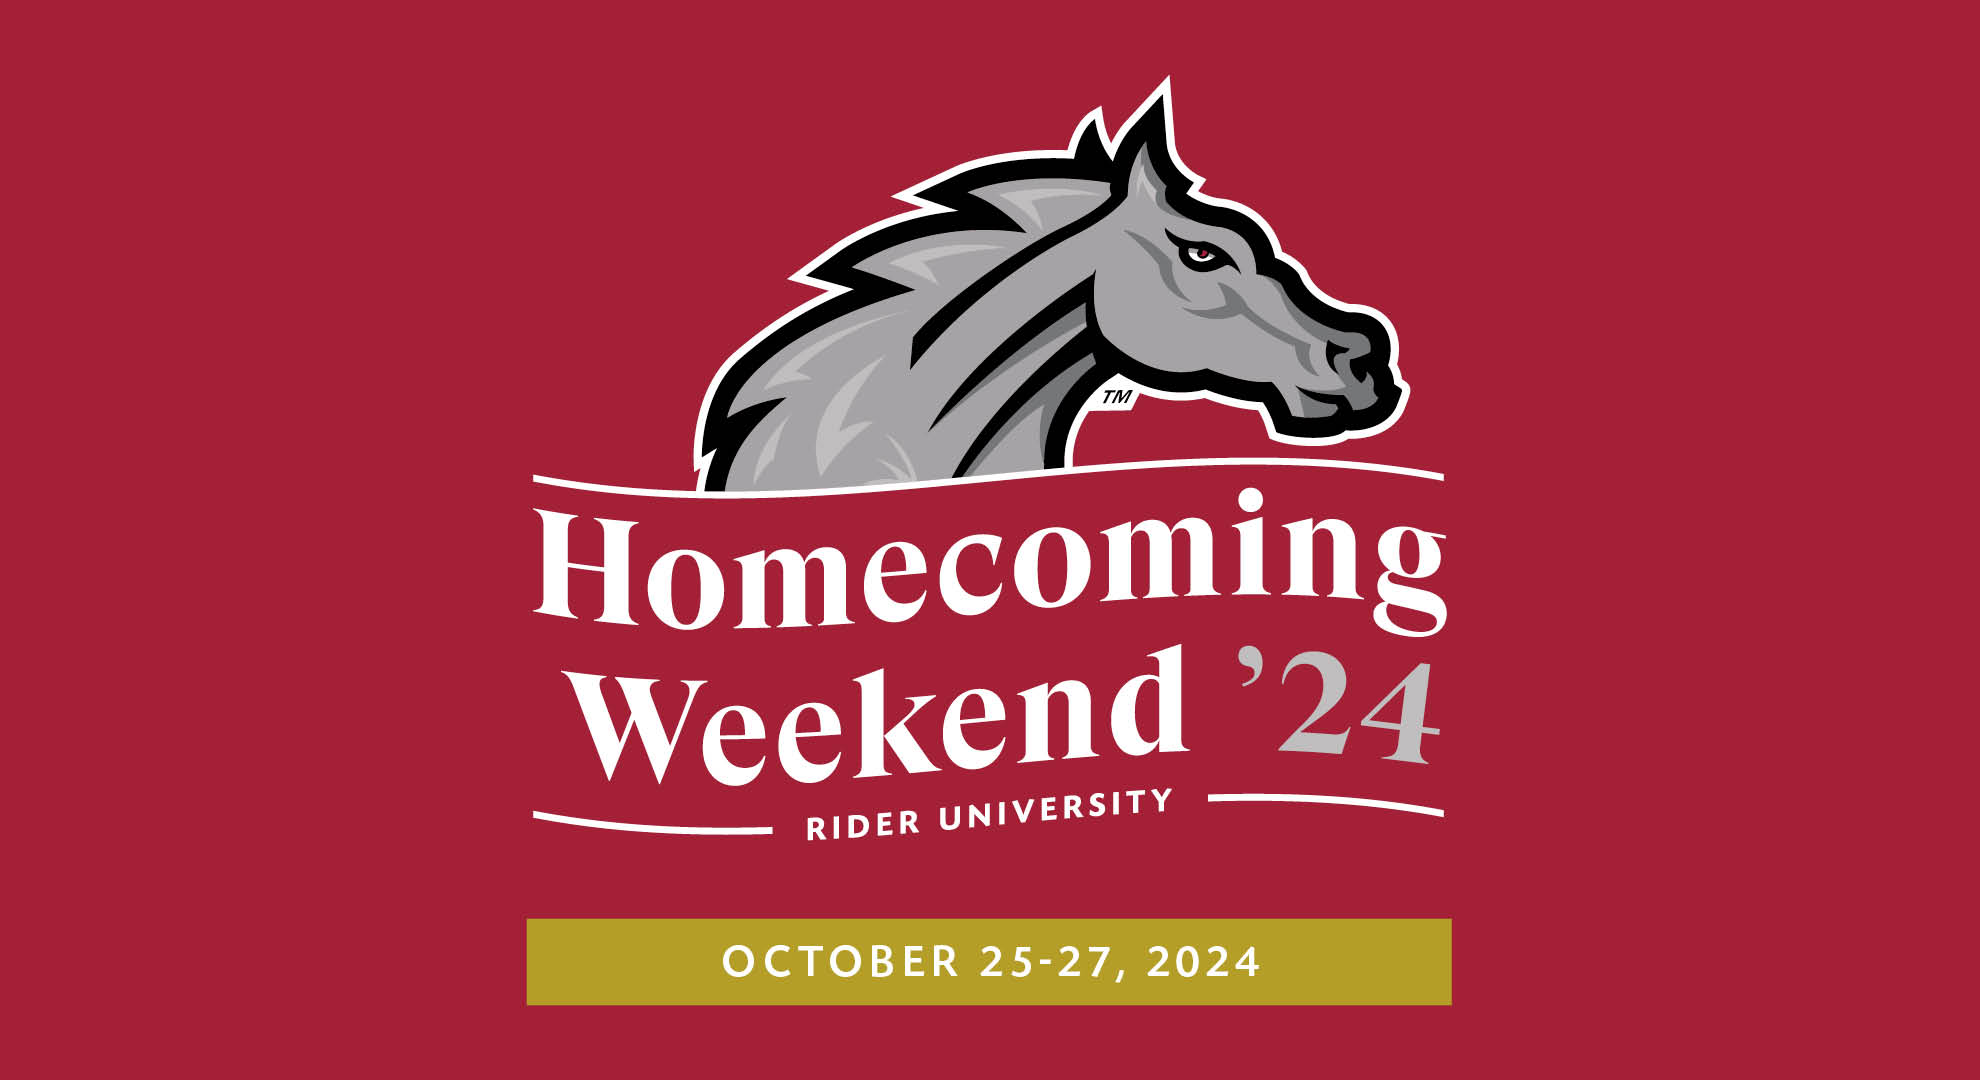 Homecoming Weekend '24: October 25-27, 2024